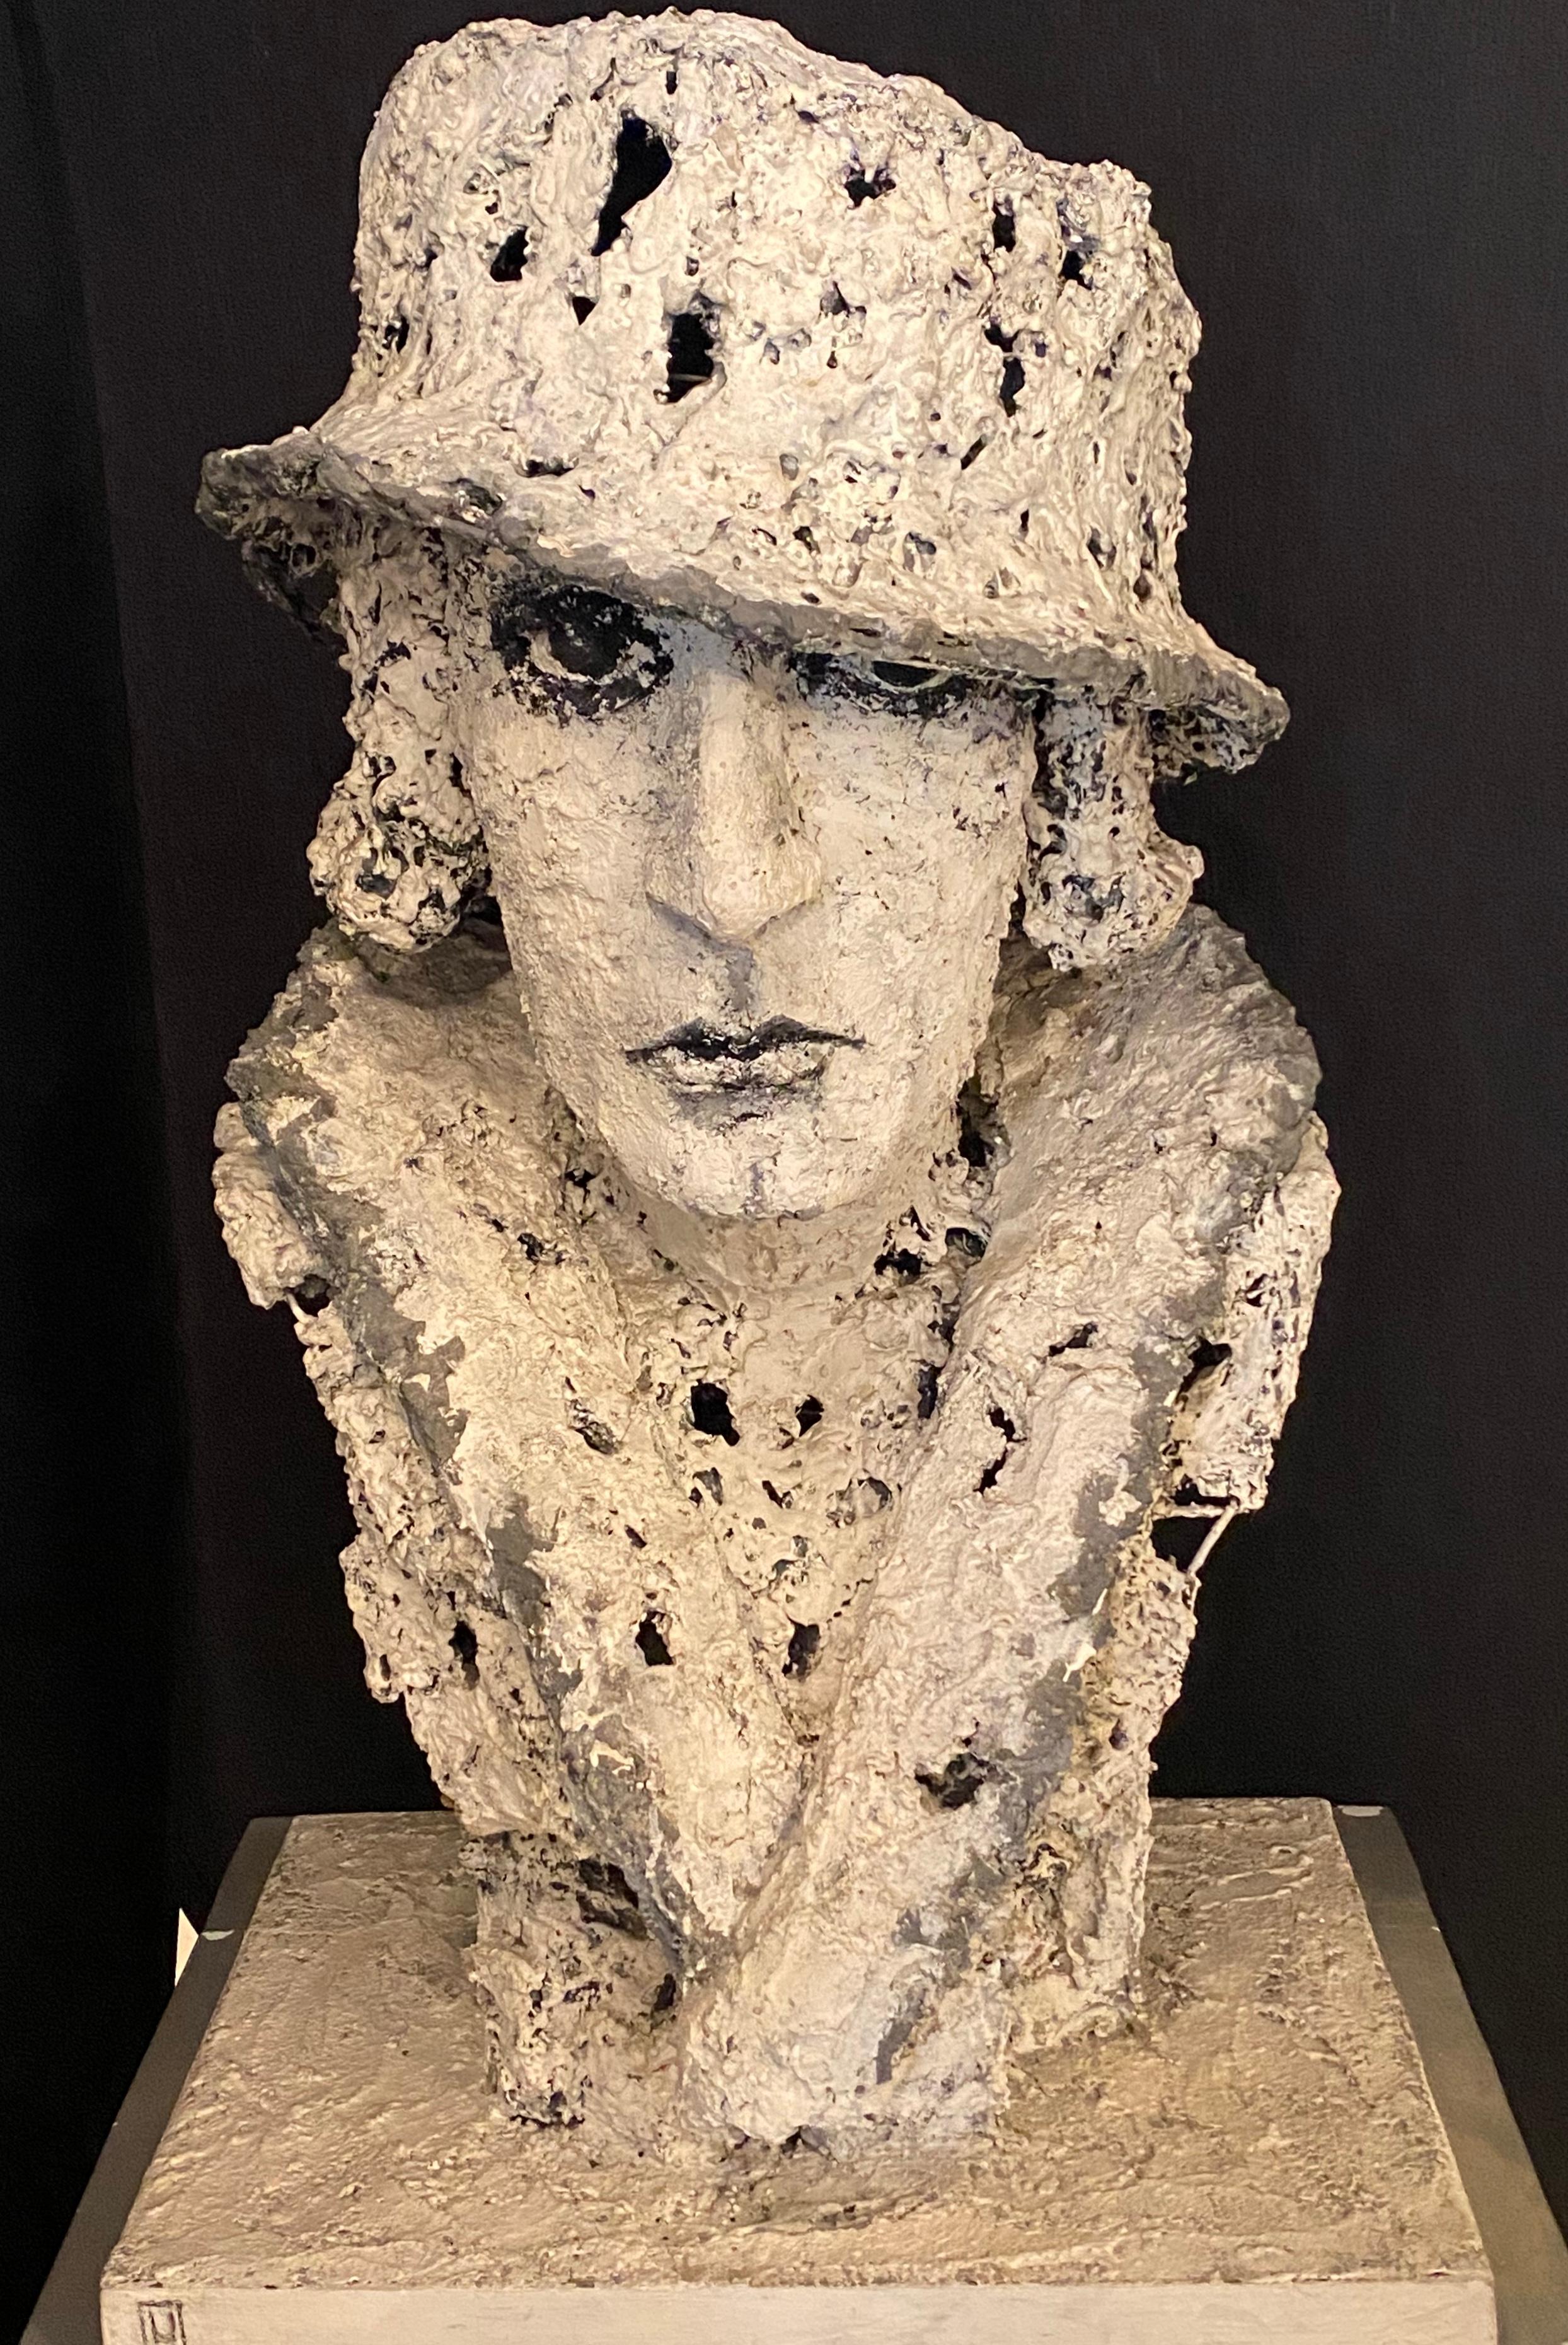 Palatial bust of Henri Robert-Marcel Duchamp by Ursula Meyer. The sculpture itself measures 47